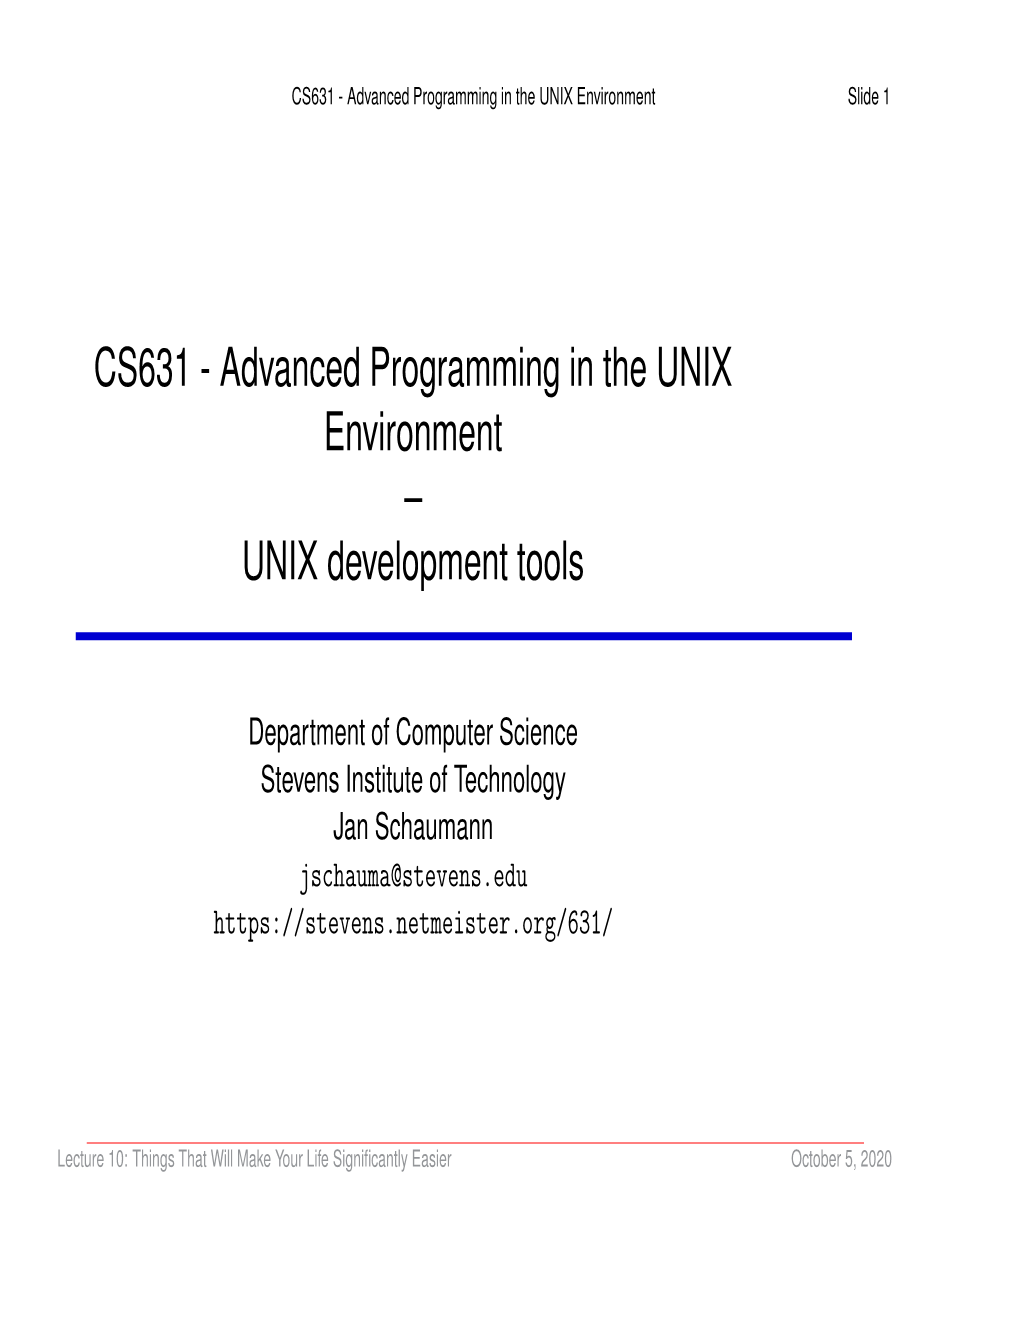 Advanced Programming in the UNIX Environment – UNIX Development Tools